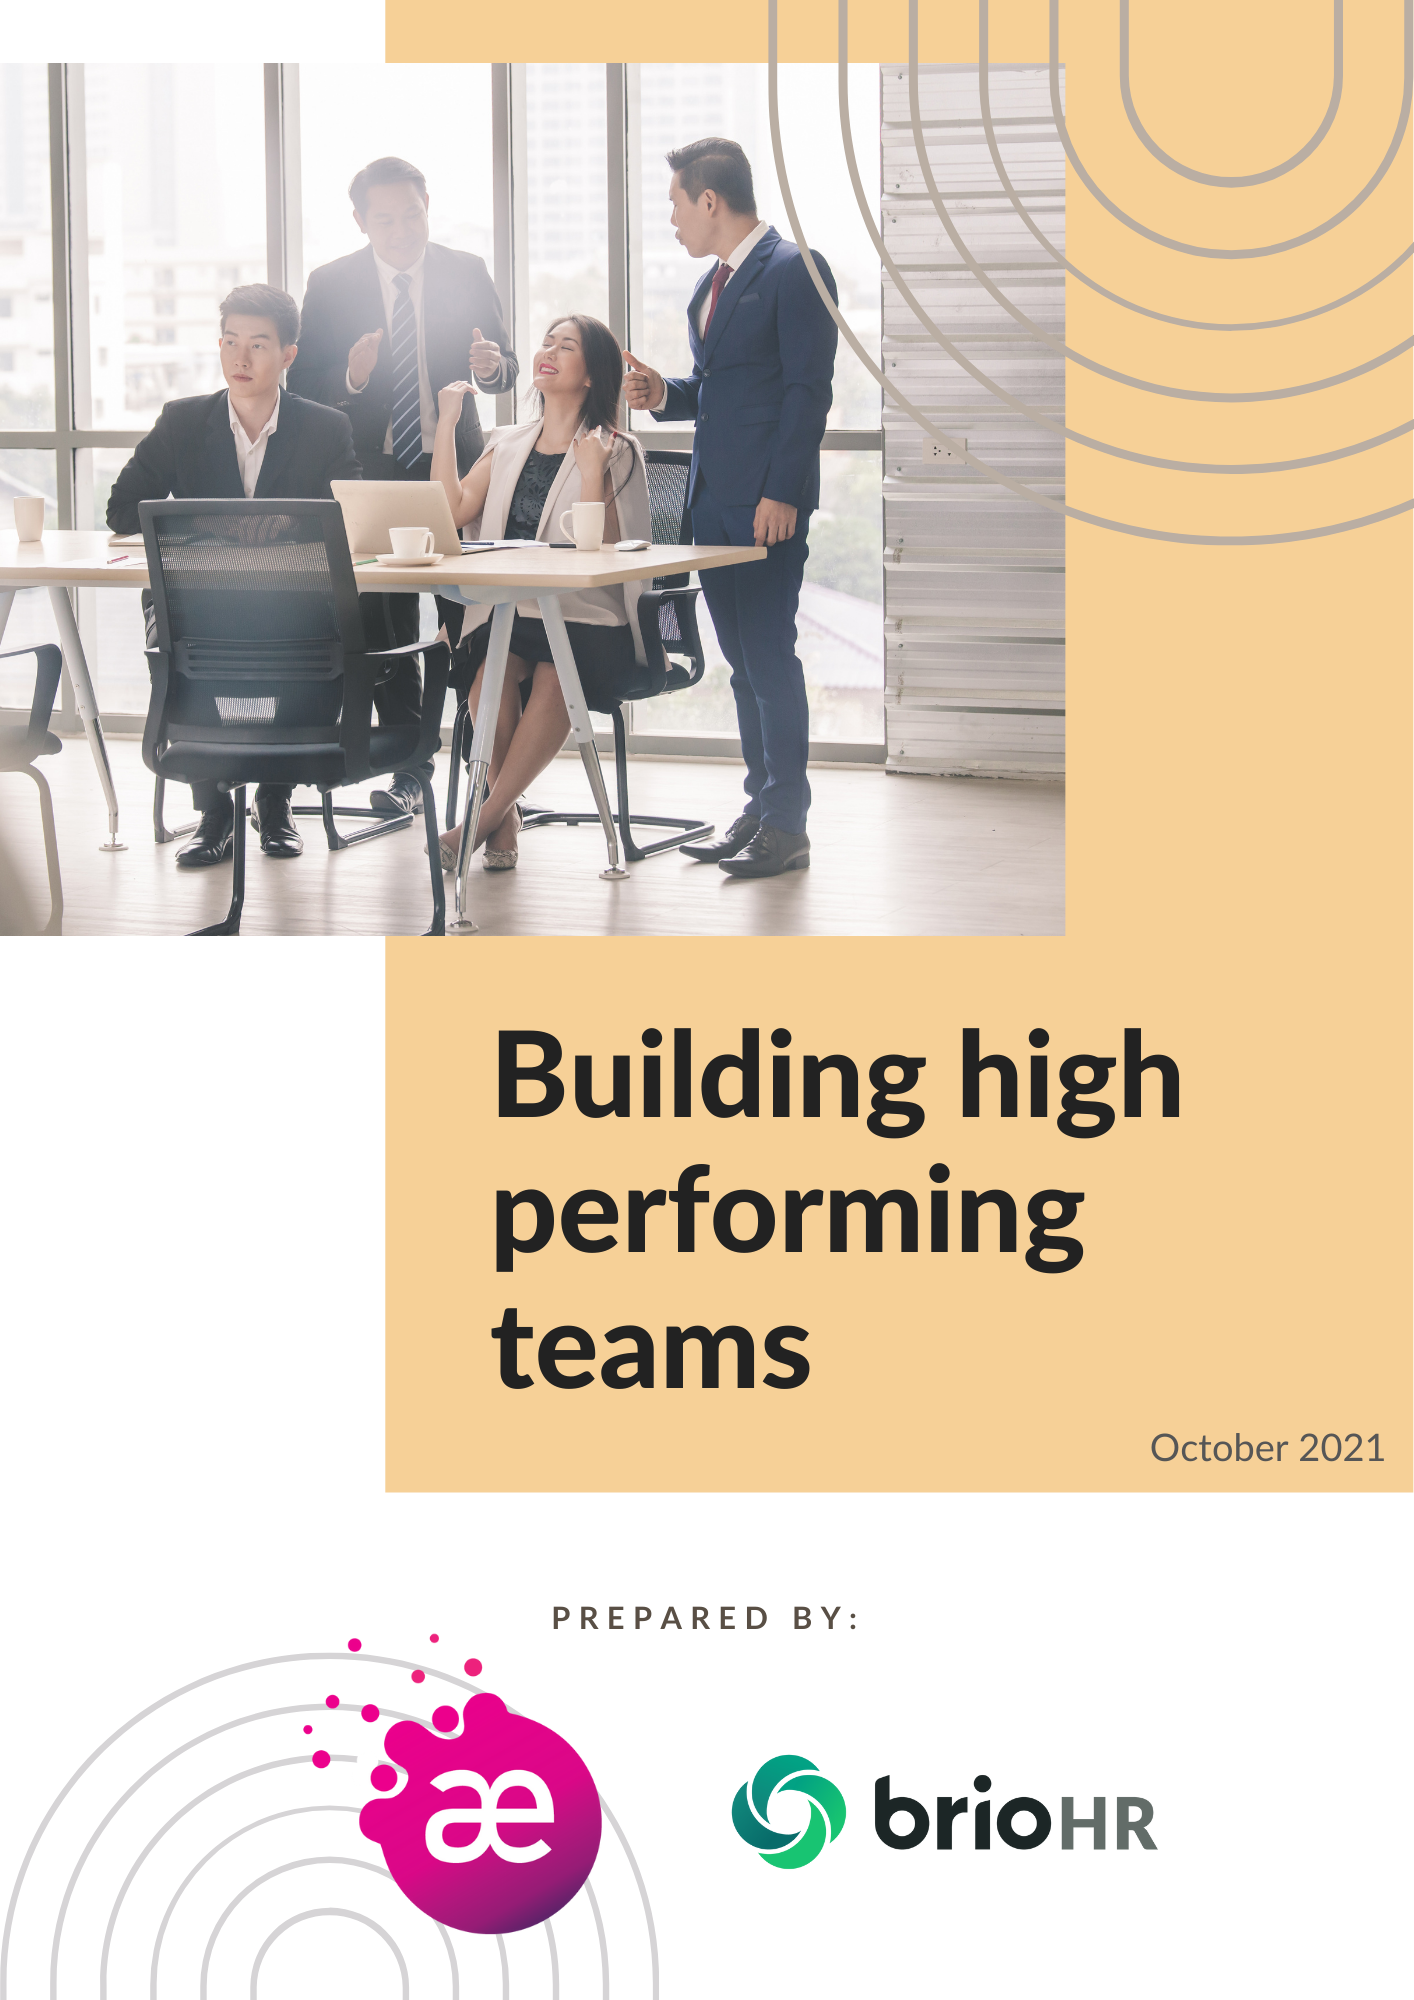 Building high performing teams